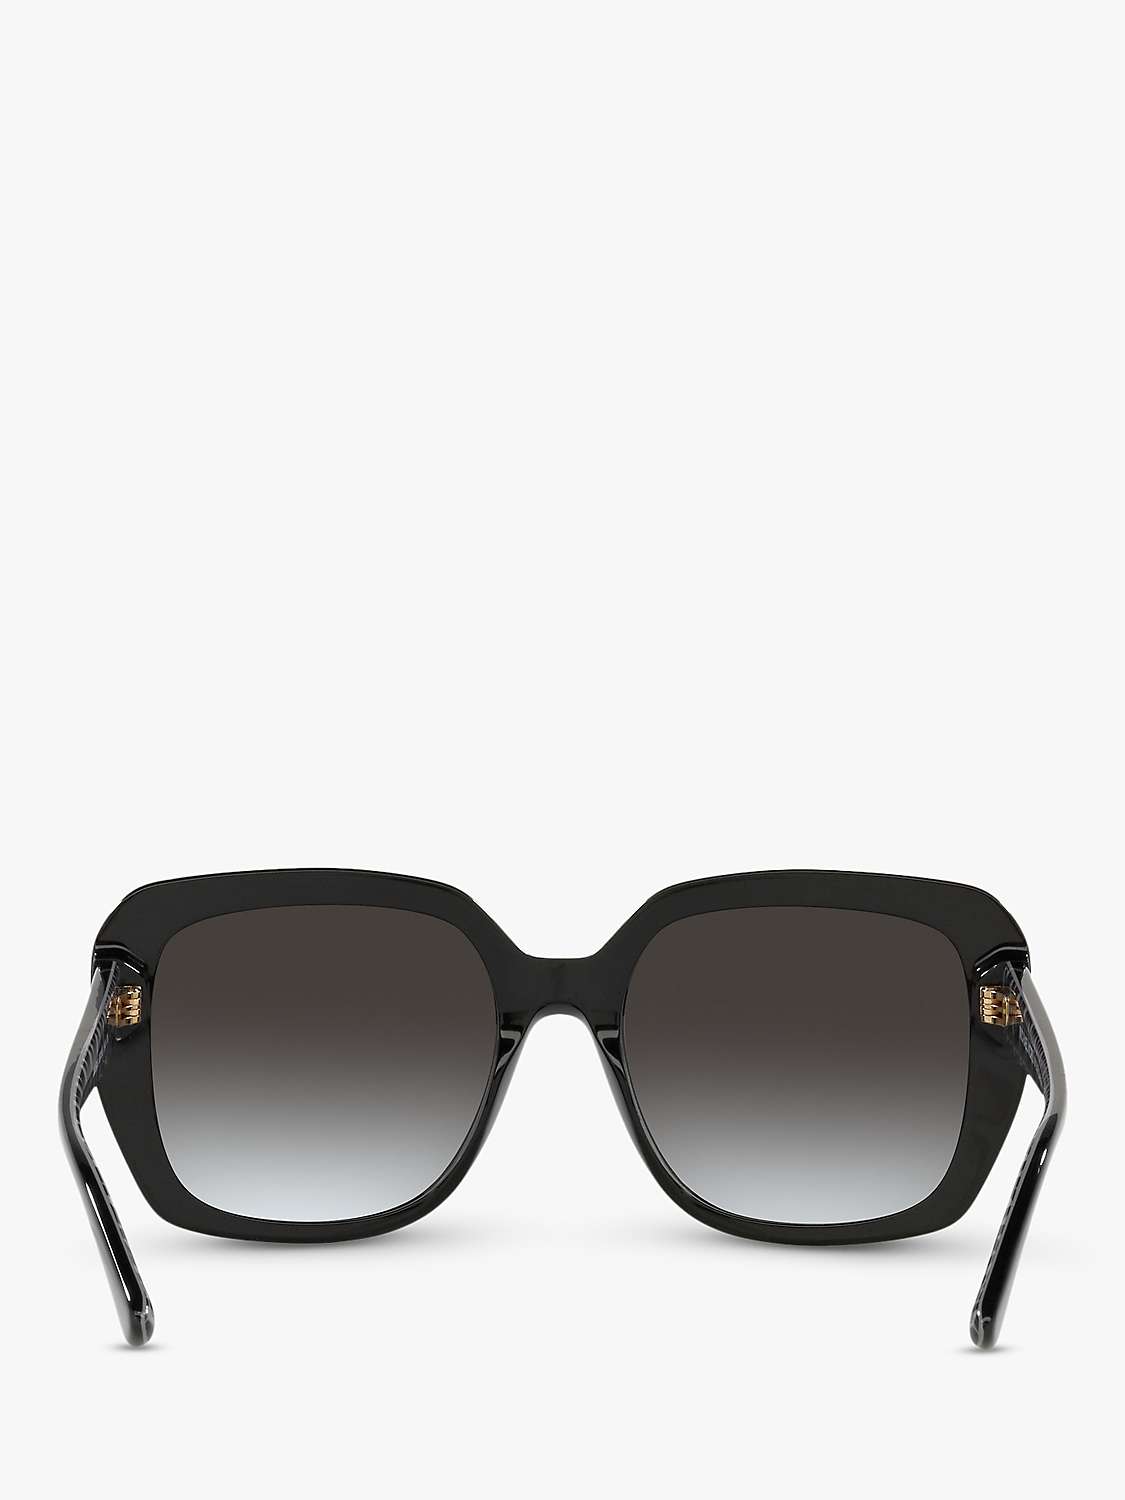 Buy Michael Kors MK2140 Women's Manhasset Square Sunglasses Online at johnlewis.com